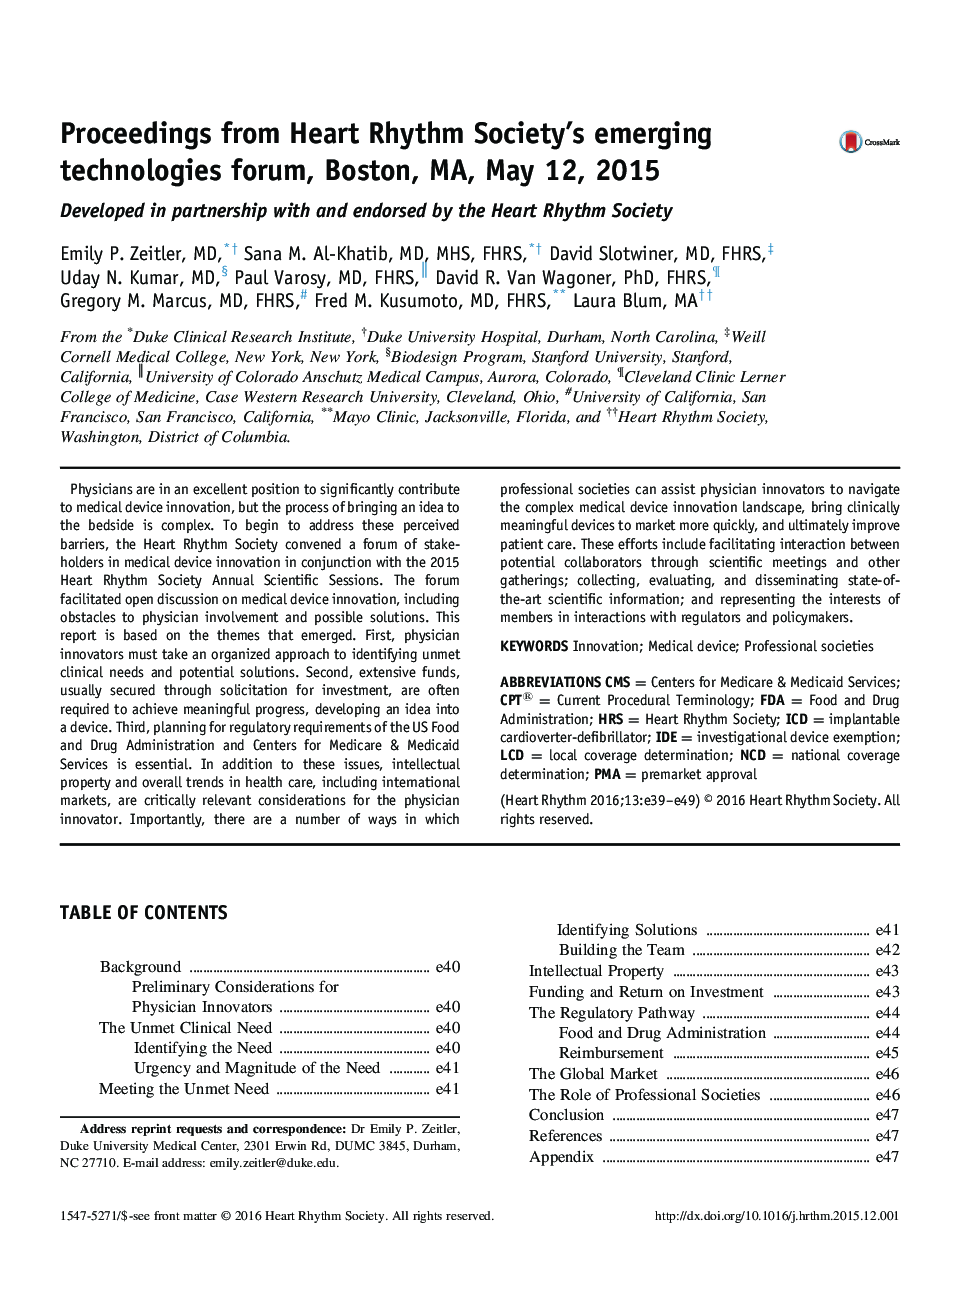 Proceedings from Heart Rhythm Society's emerging technologies forum, Boston, MA, May 12, 2015